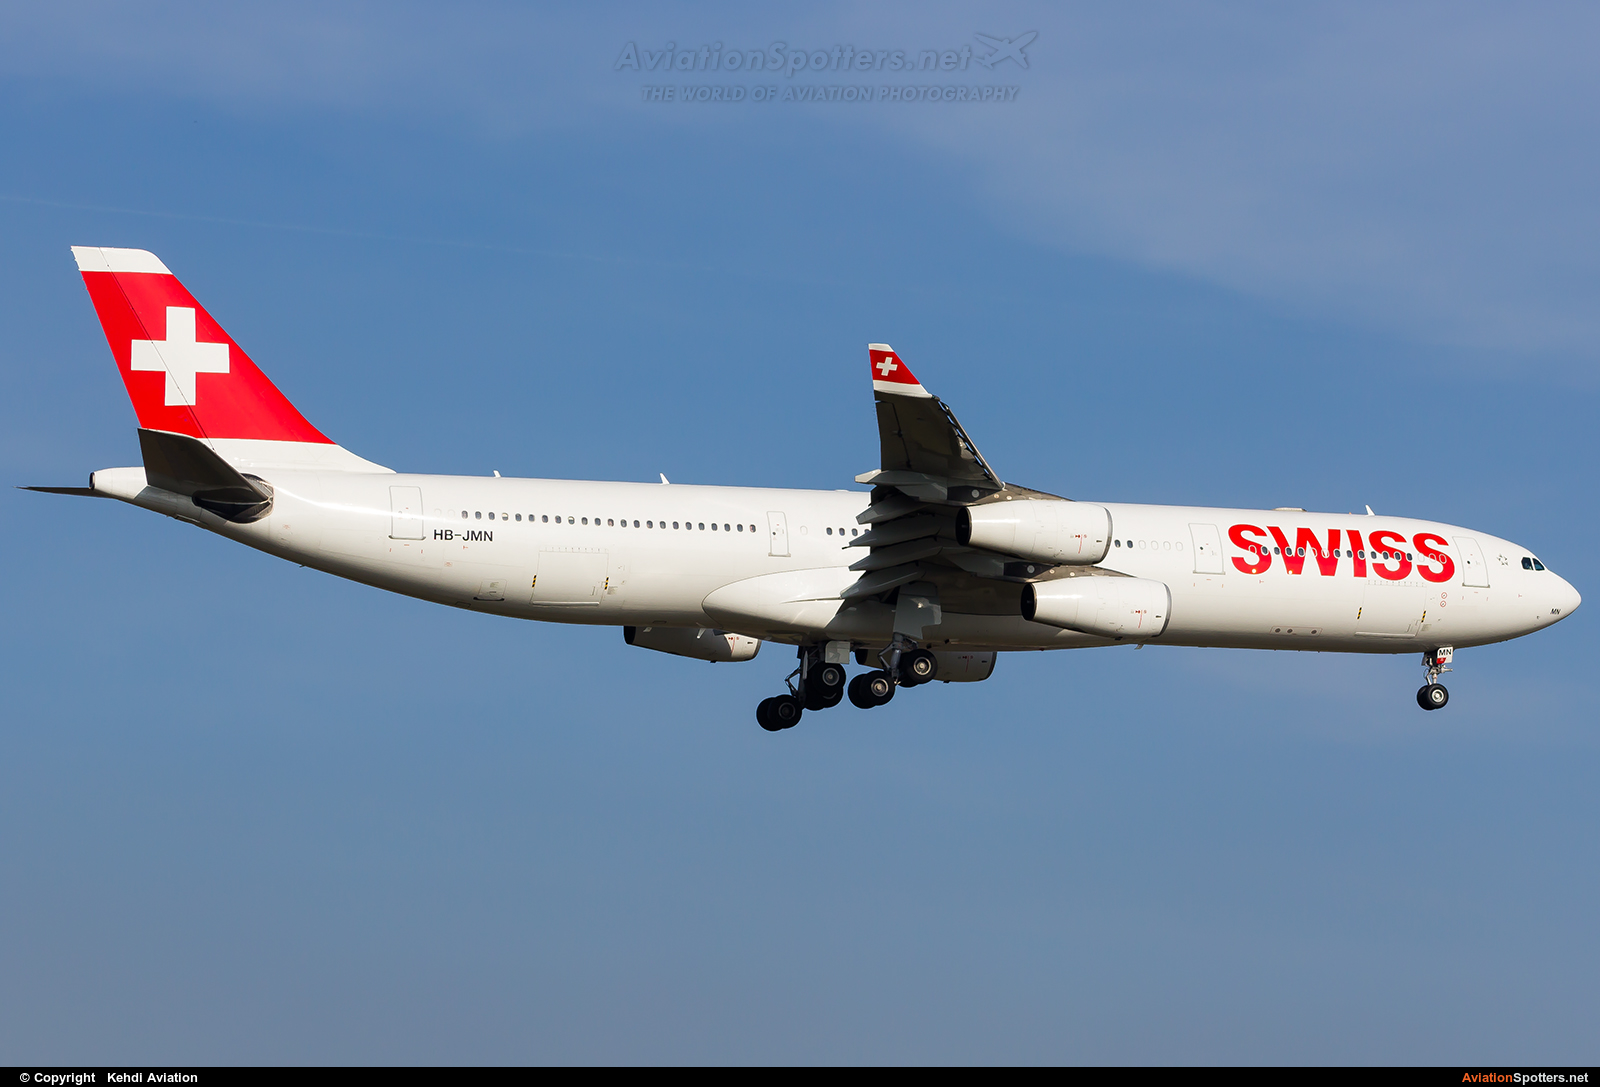 Swiss International  -  A340-300  (HB-JMN) By Kehdi Aviation (Kehdi Aviation)